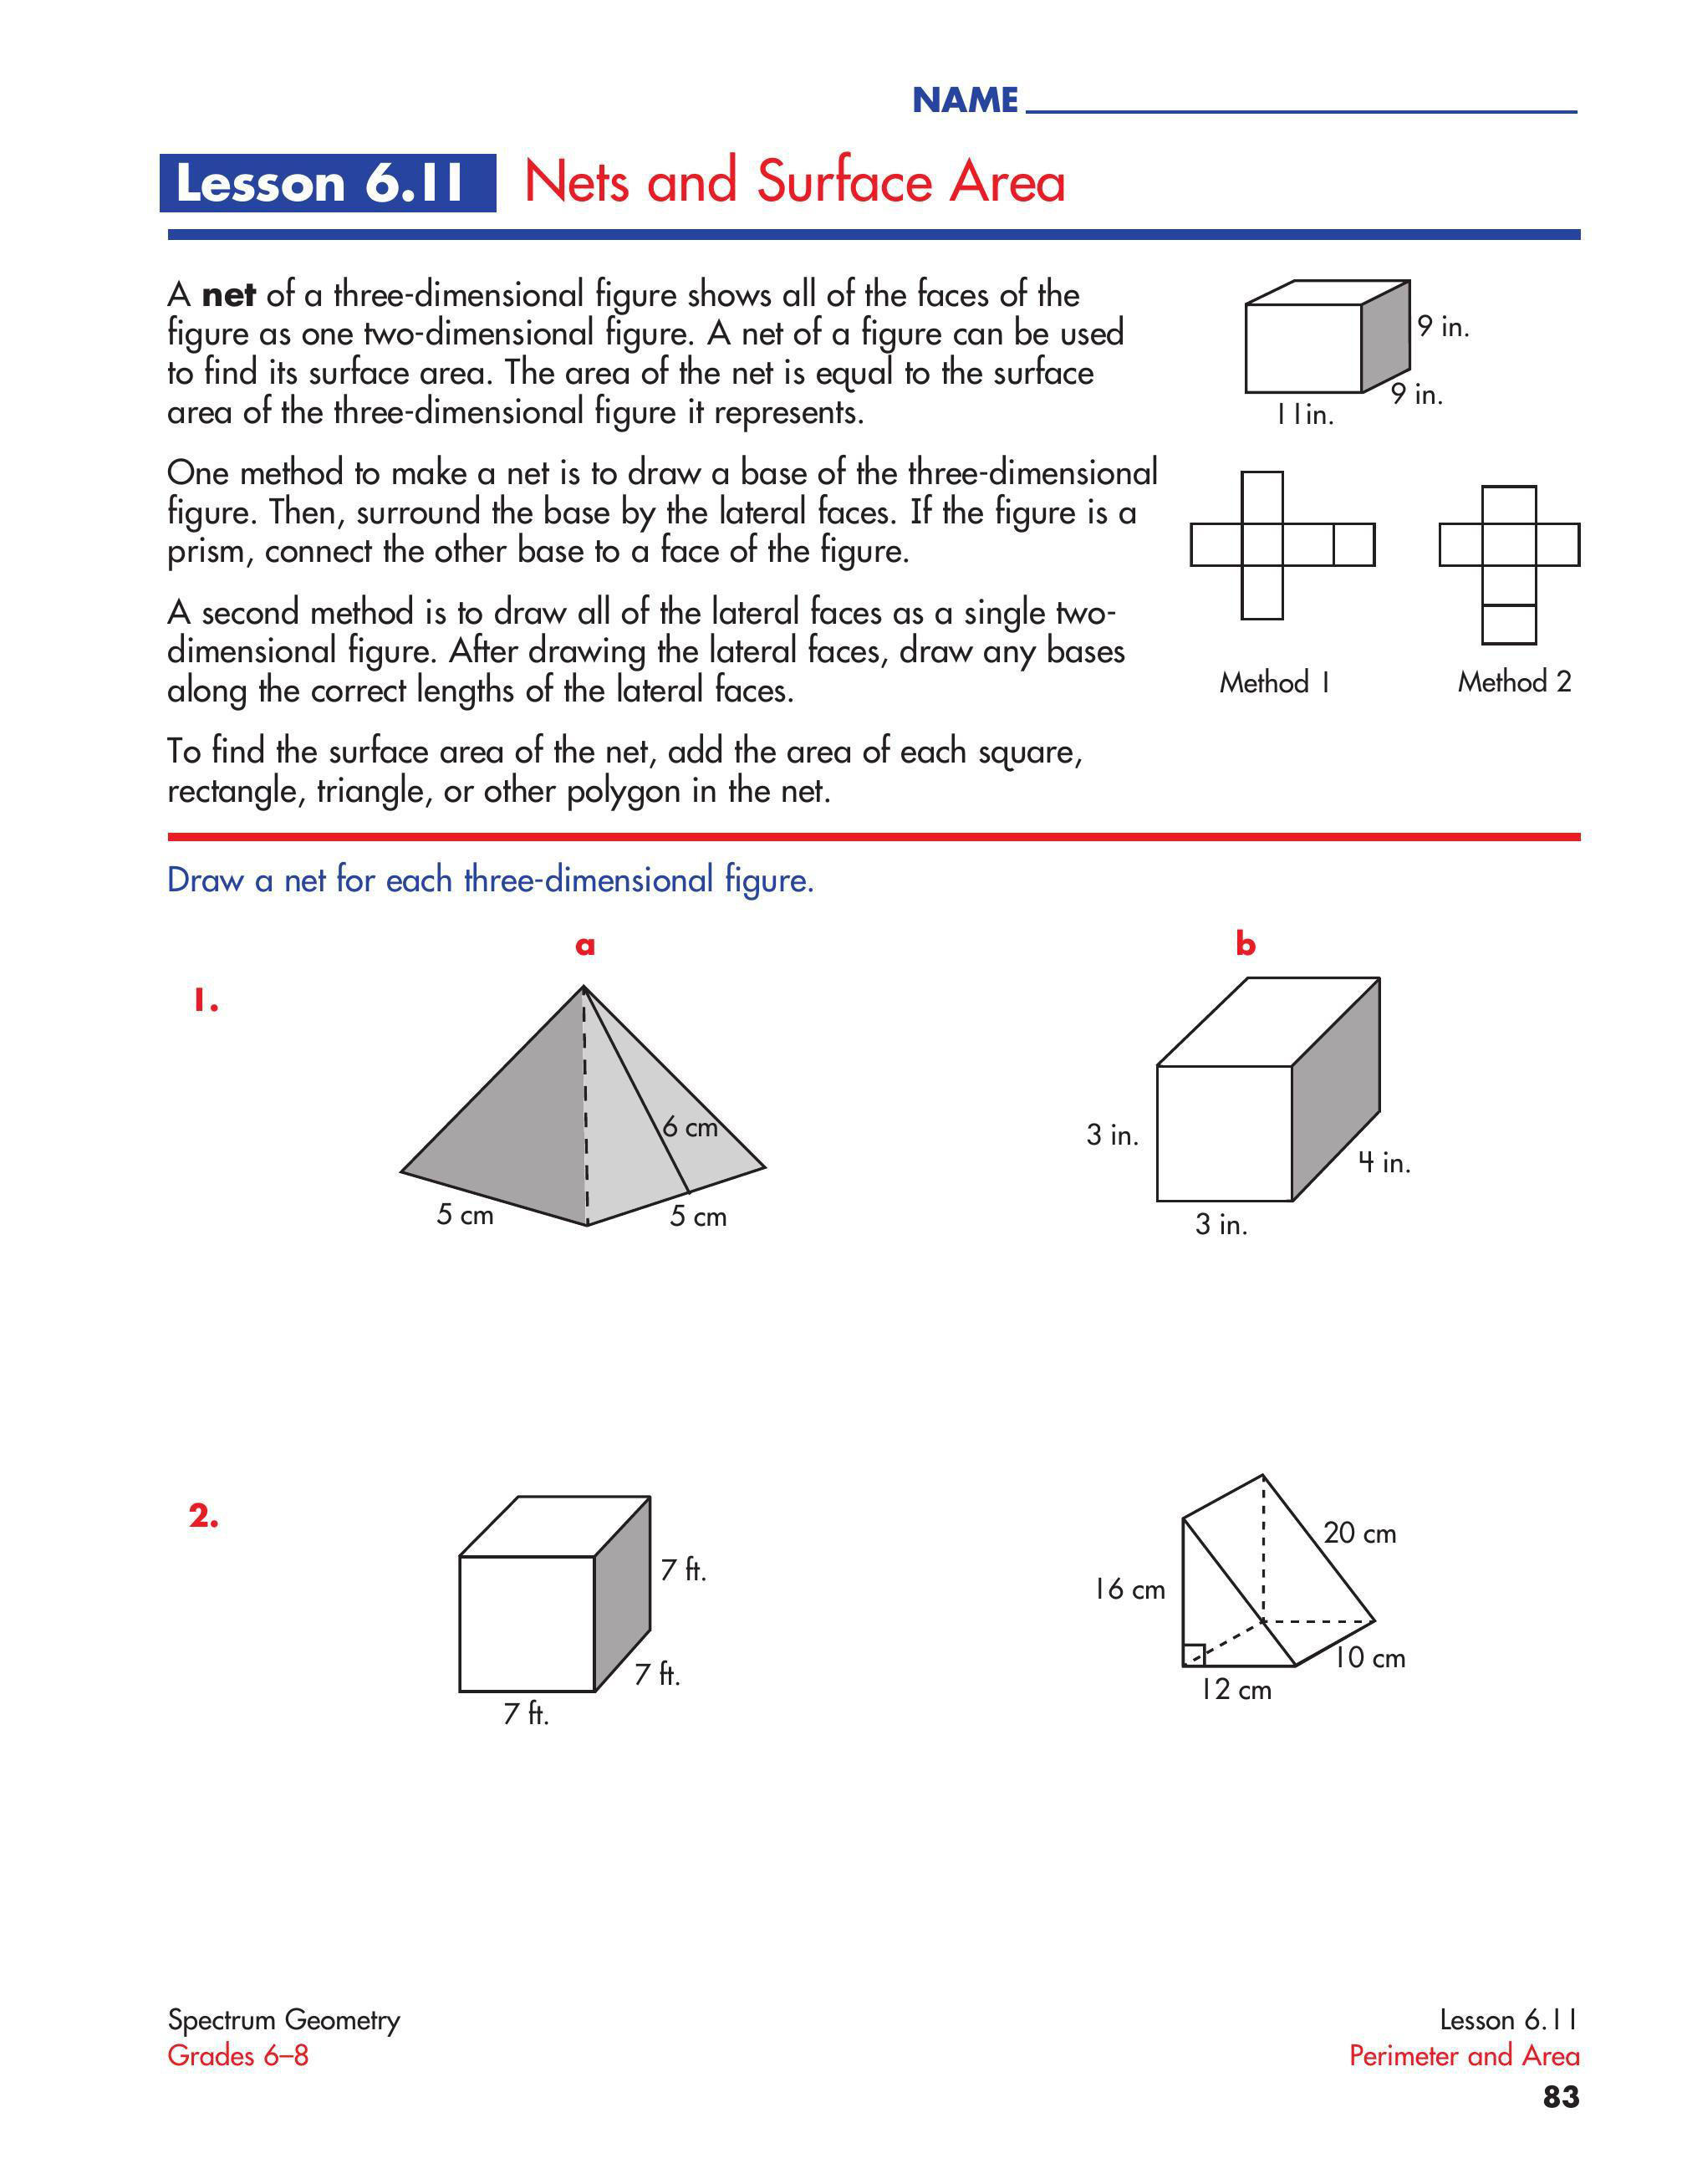 Geometry 6 8 (87)